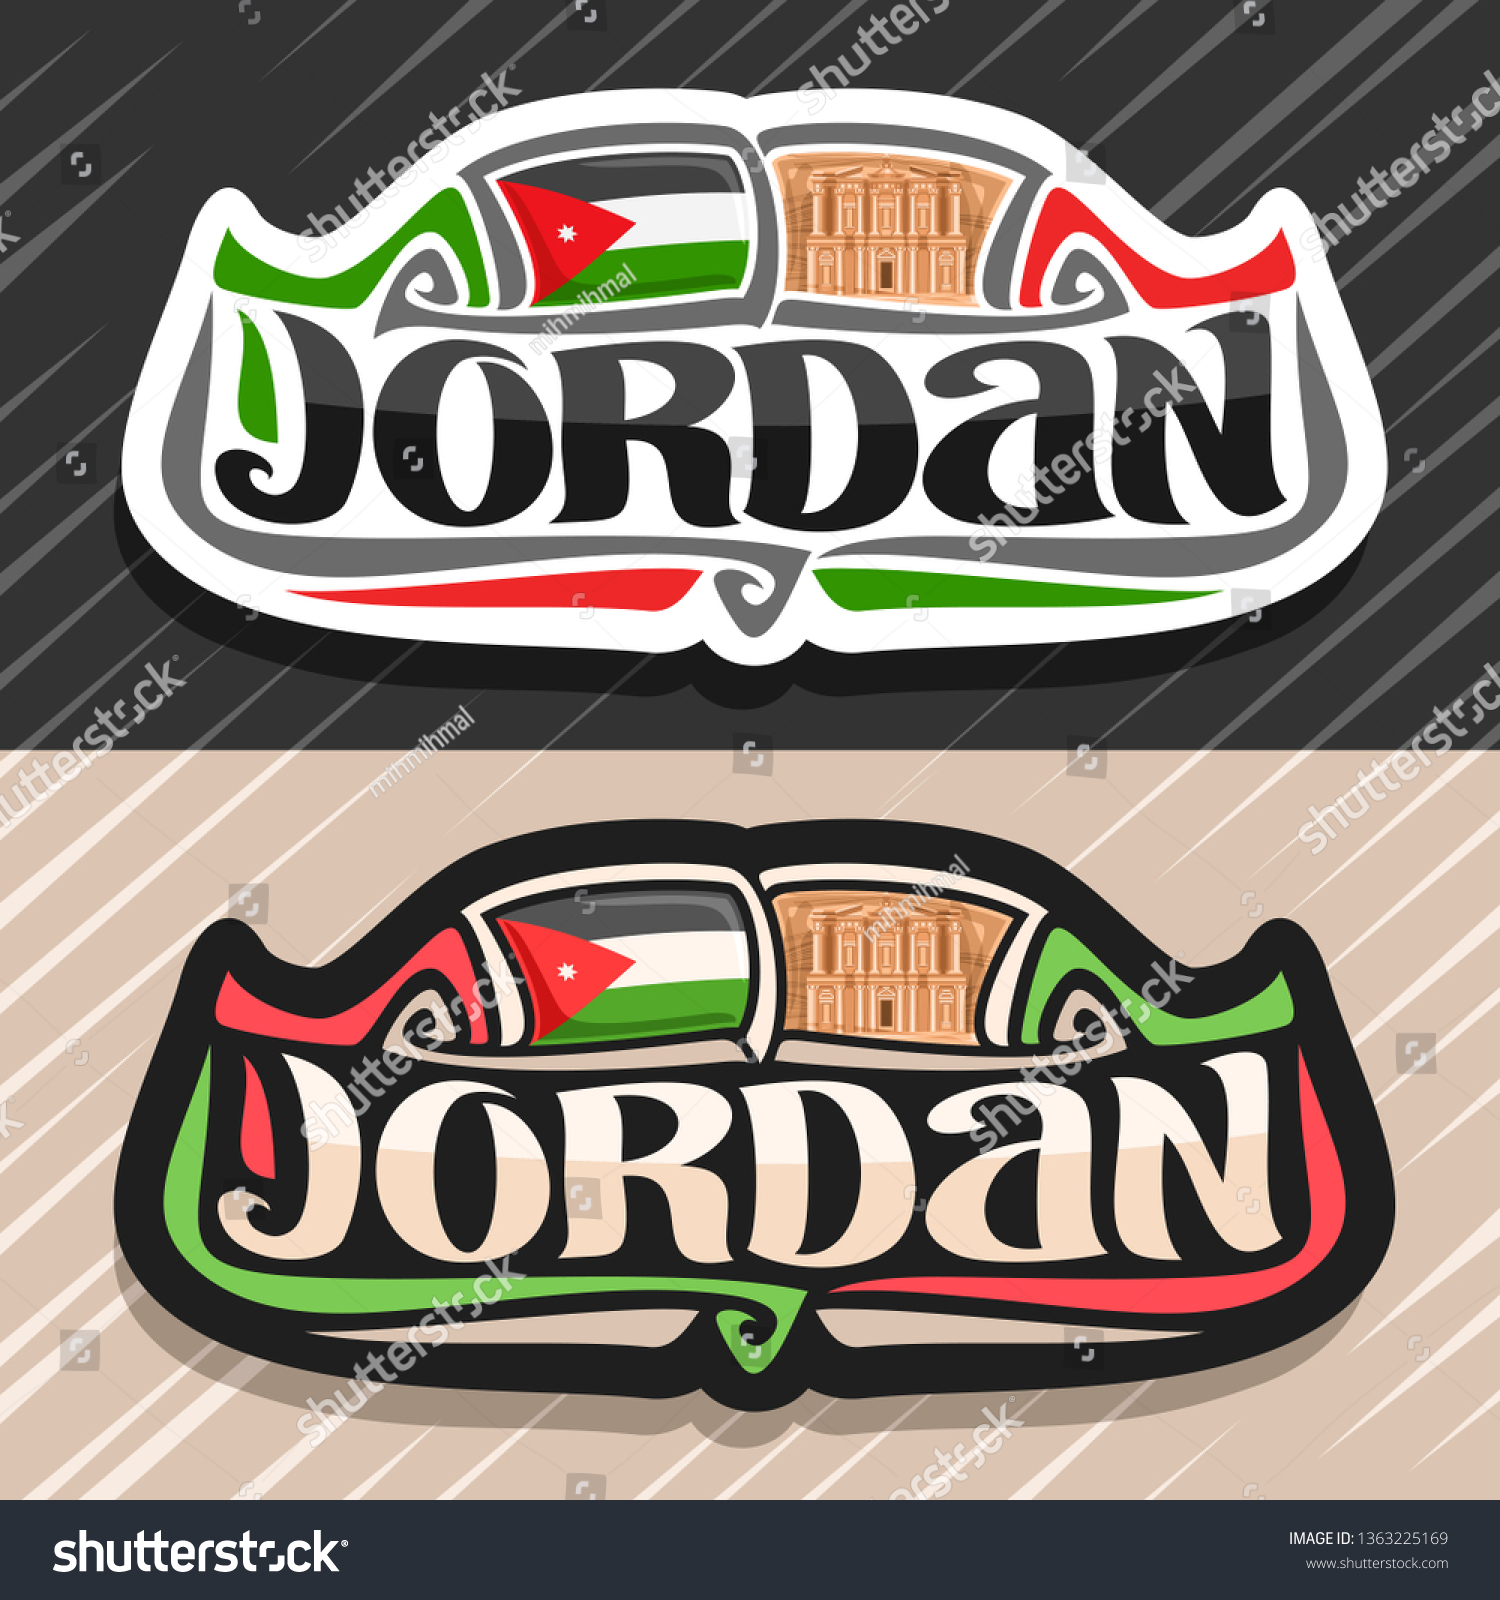 jordan country logo